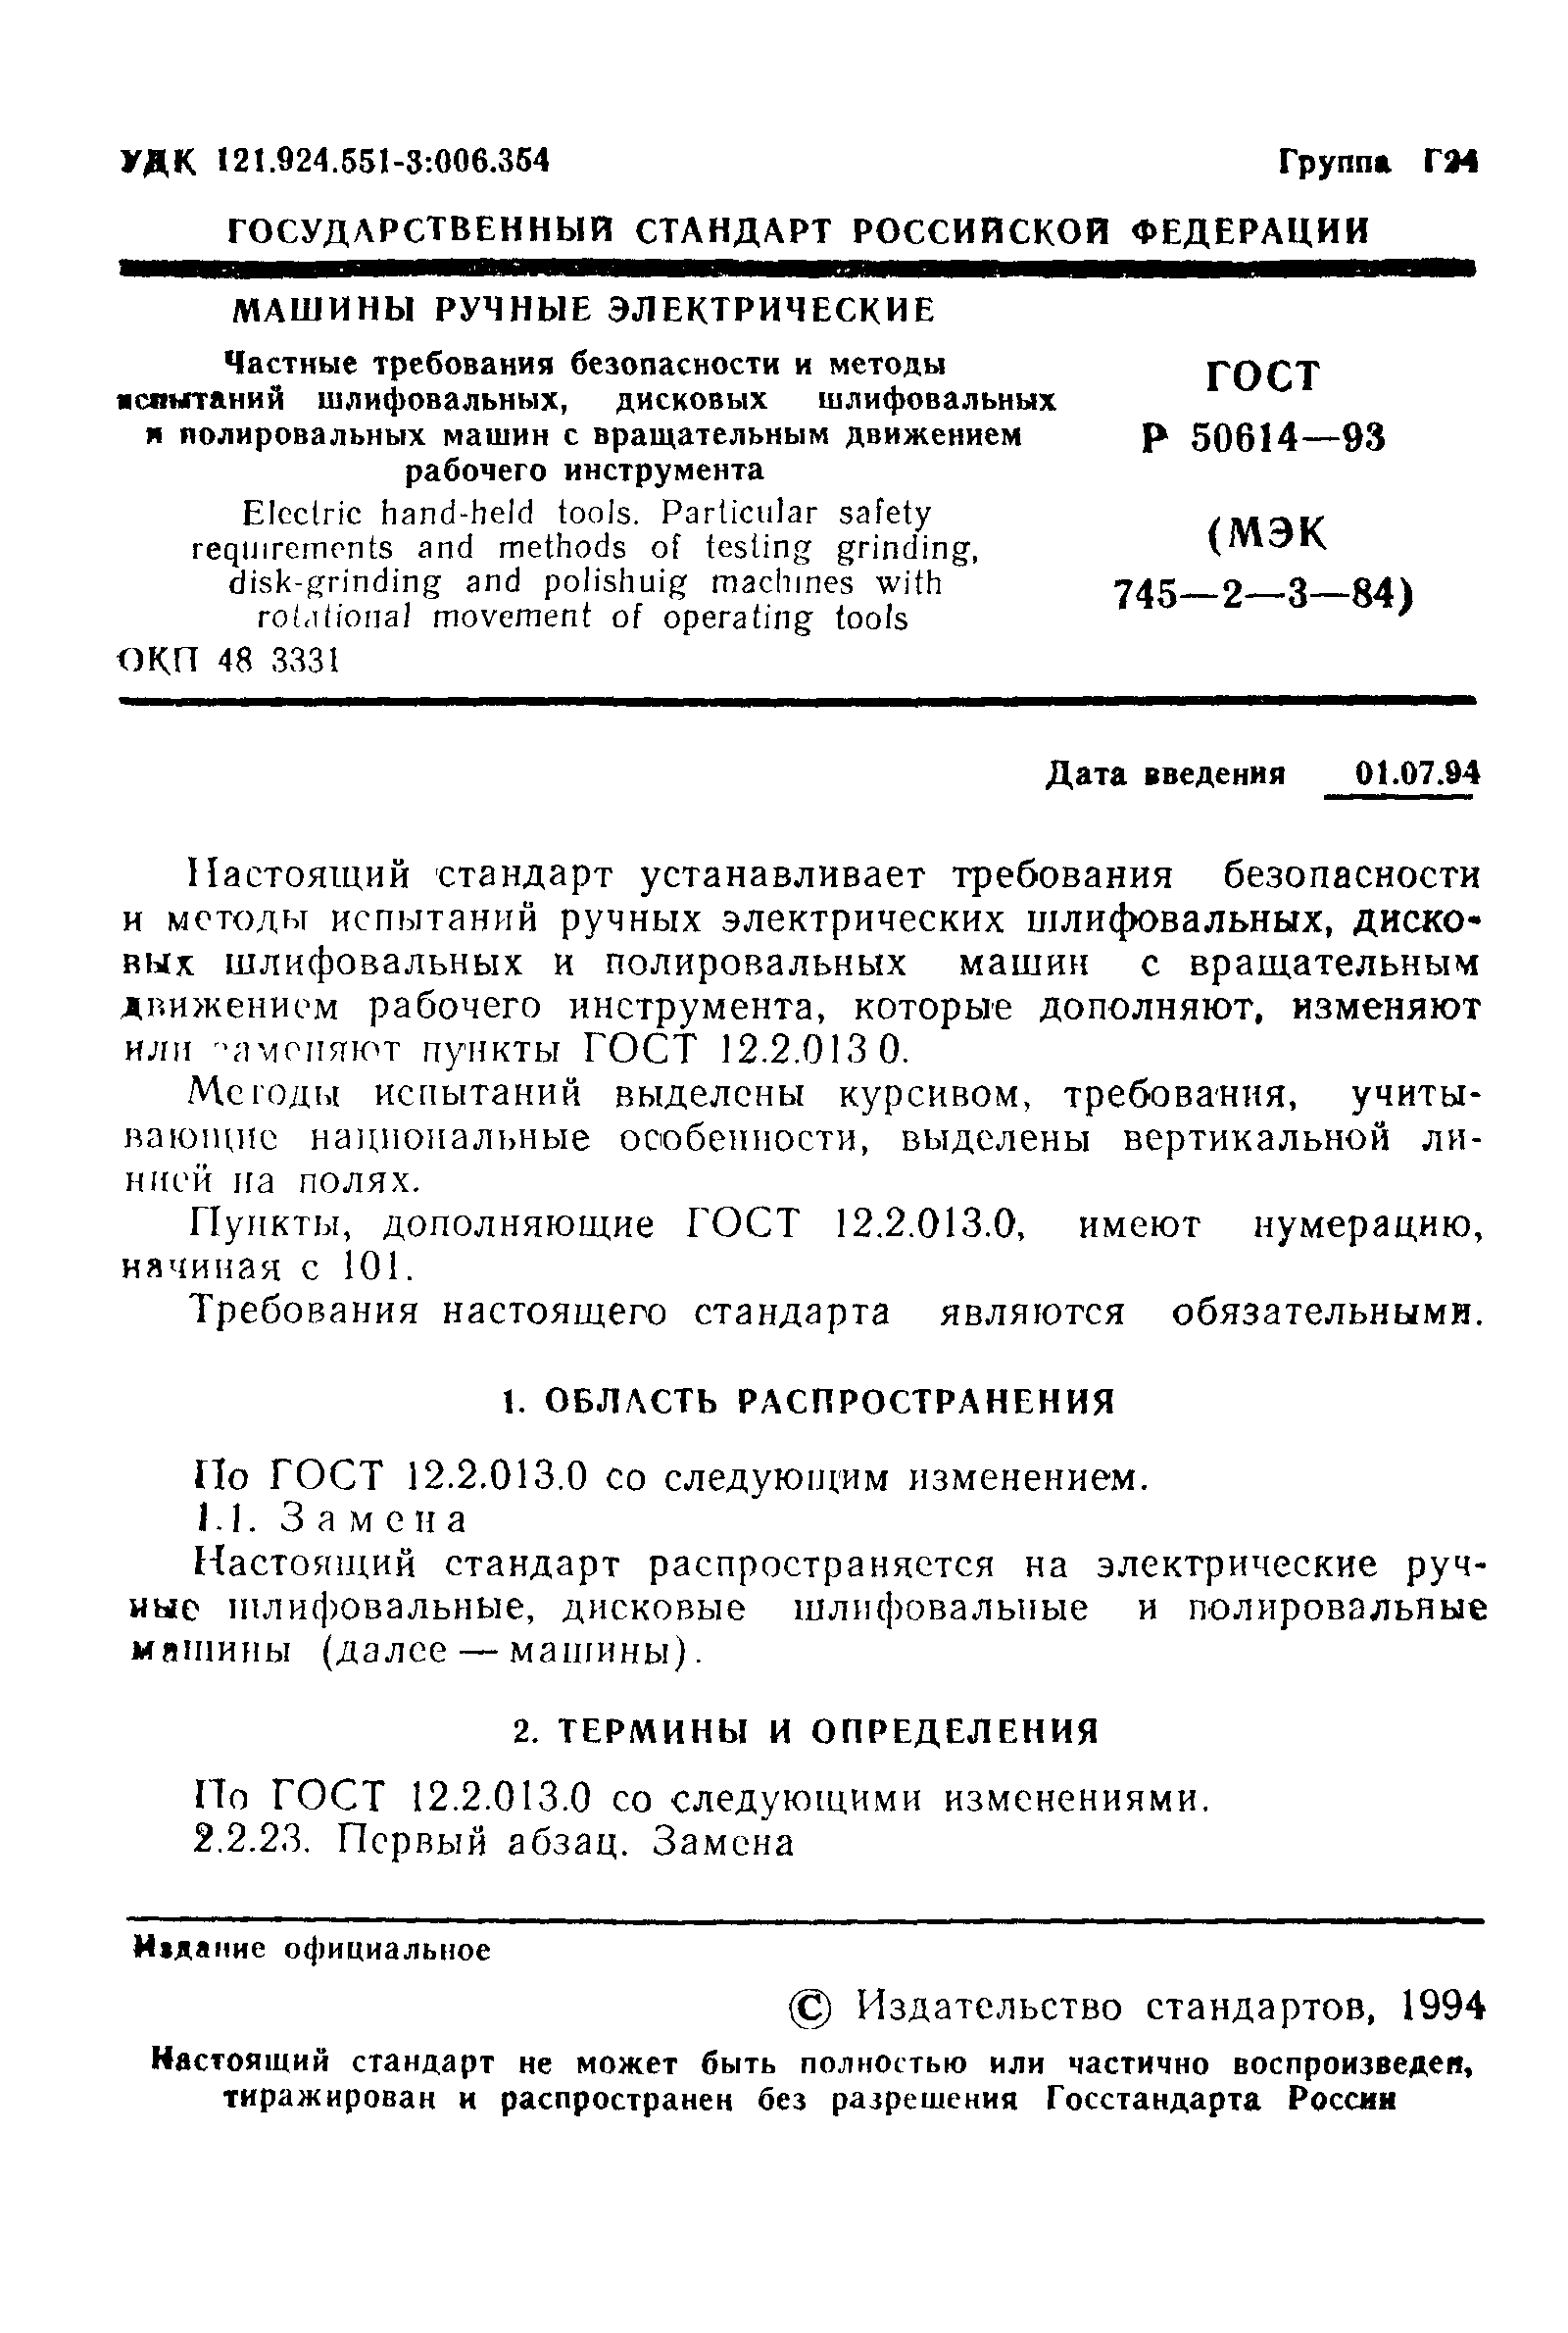 ГОСТ Р 50614-93